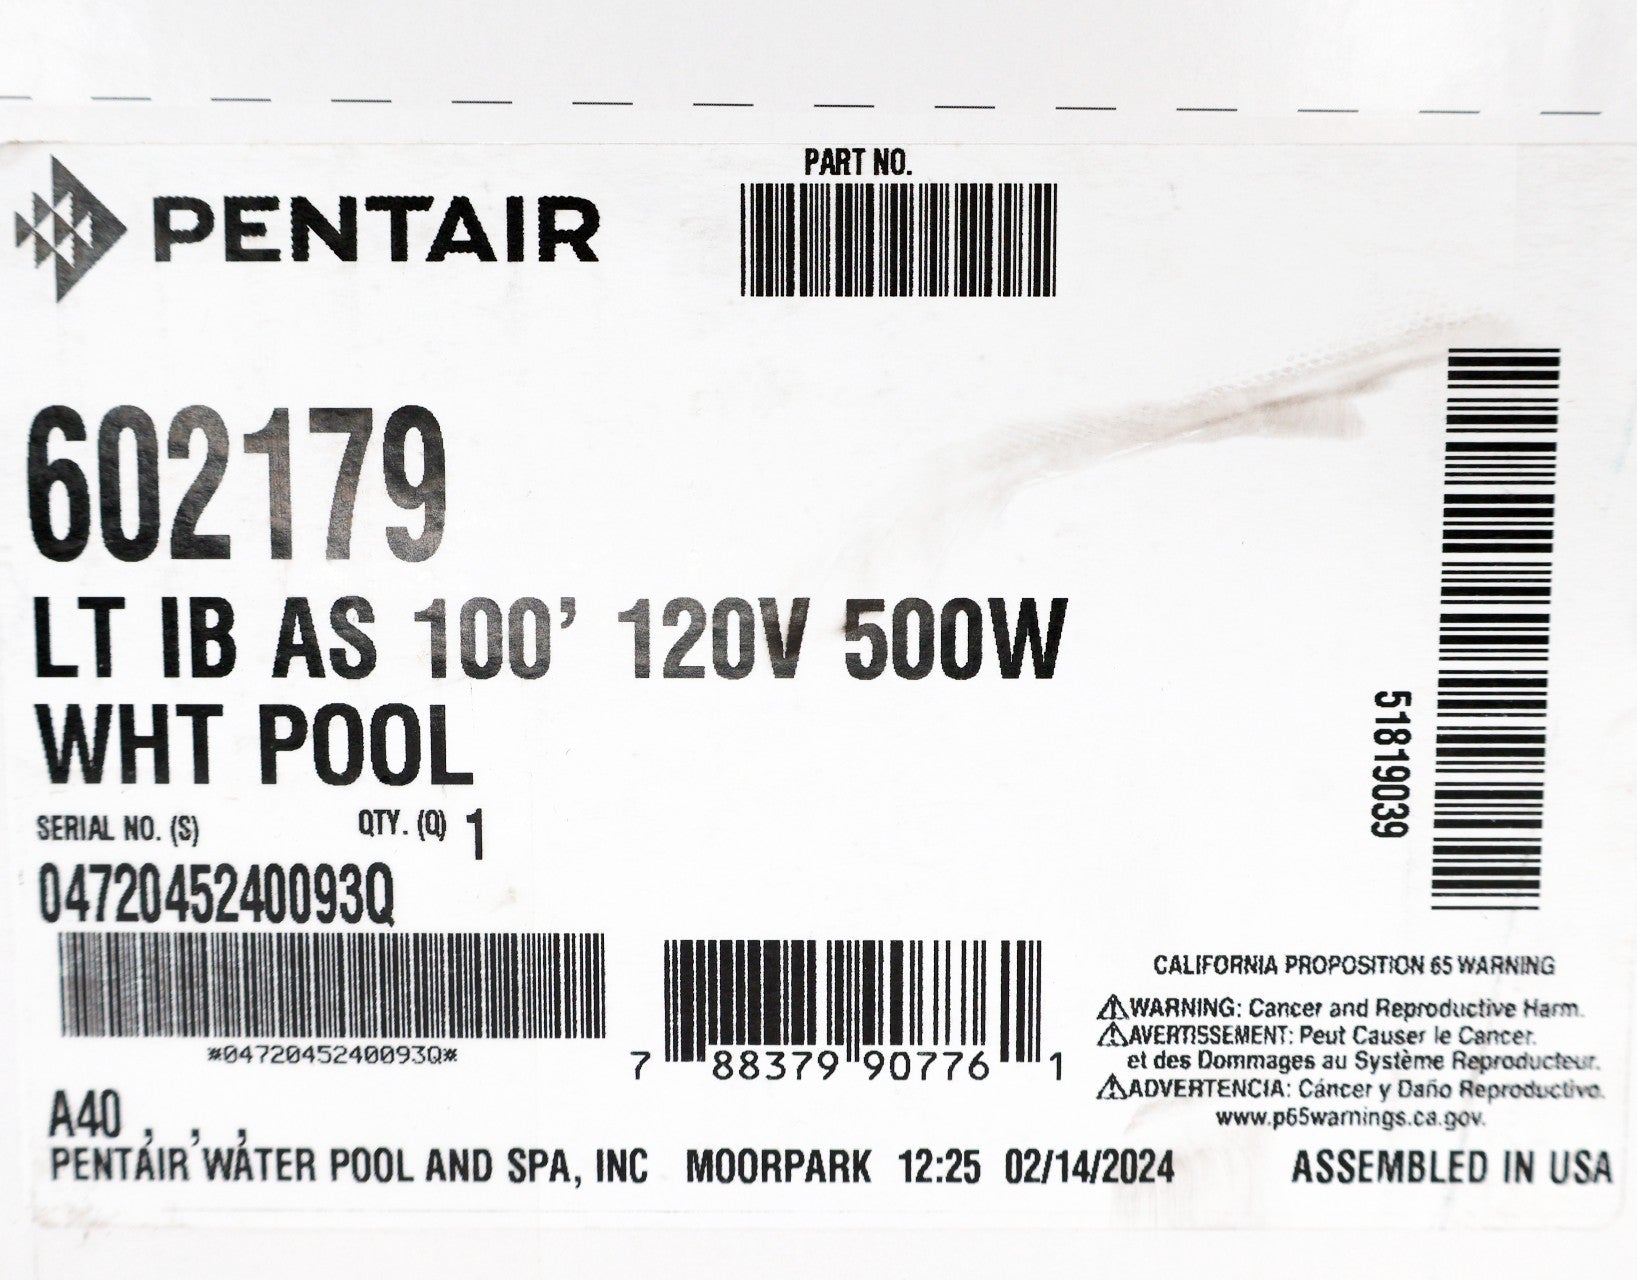 Pentair Intellibrite Architectural Series White Pool Light 100' 120V 602179 - Pool Lights - img-6